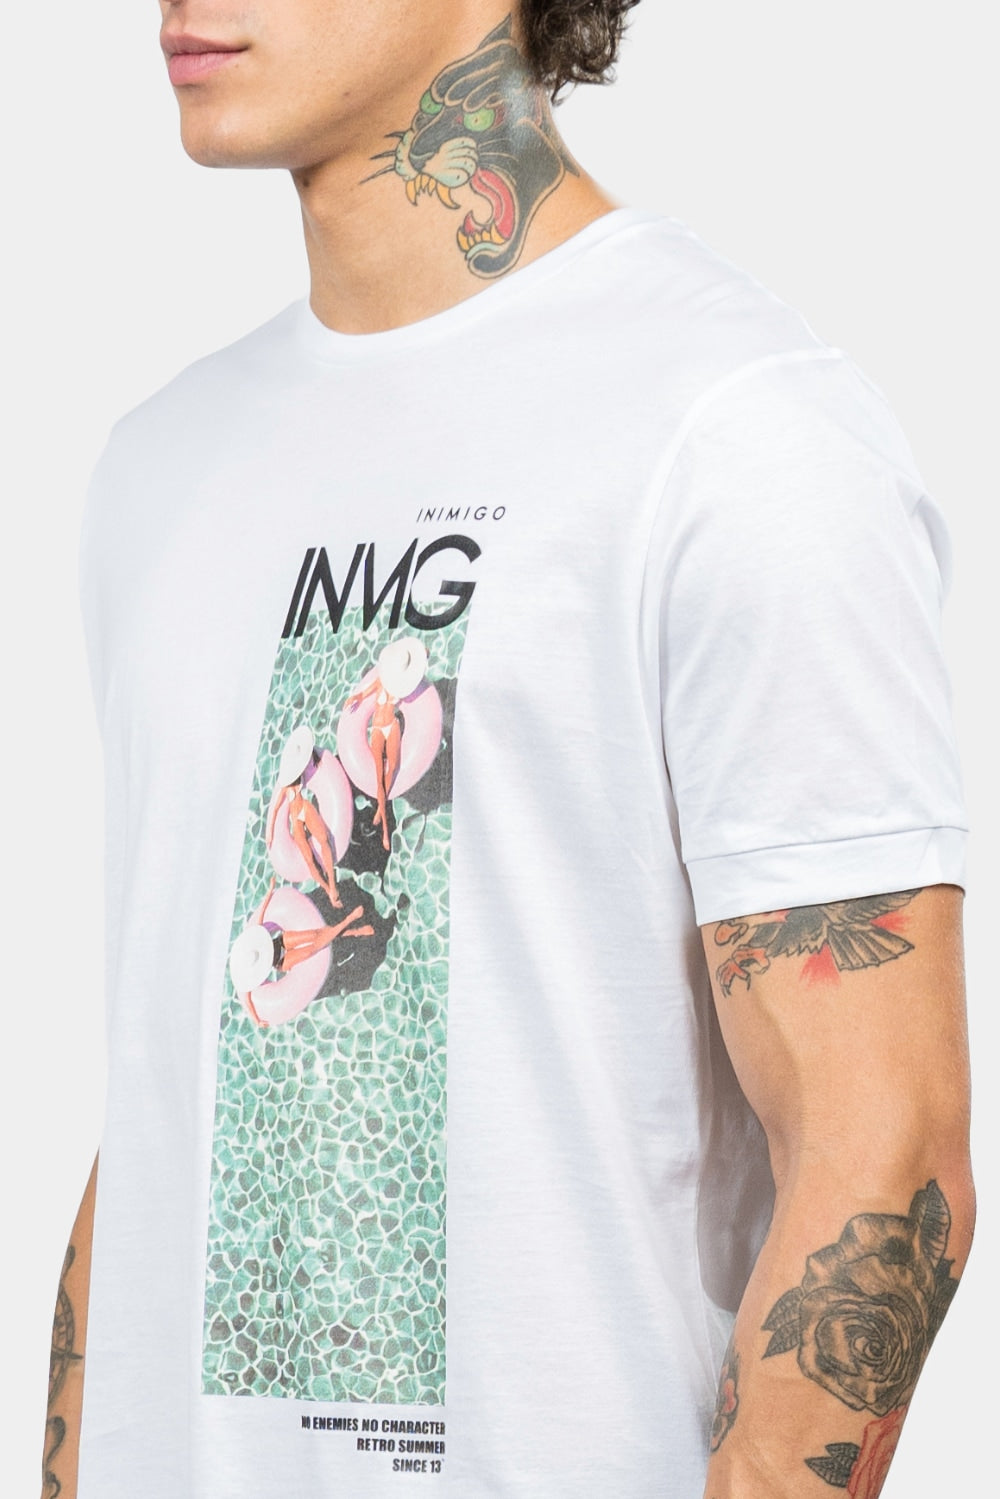 INMG Pool T-shirt